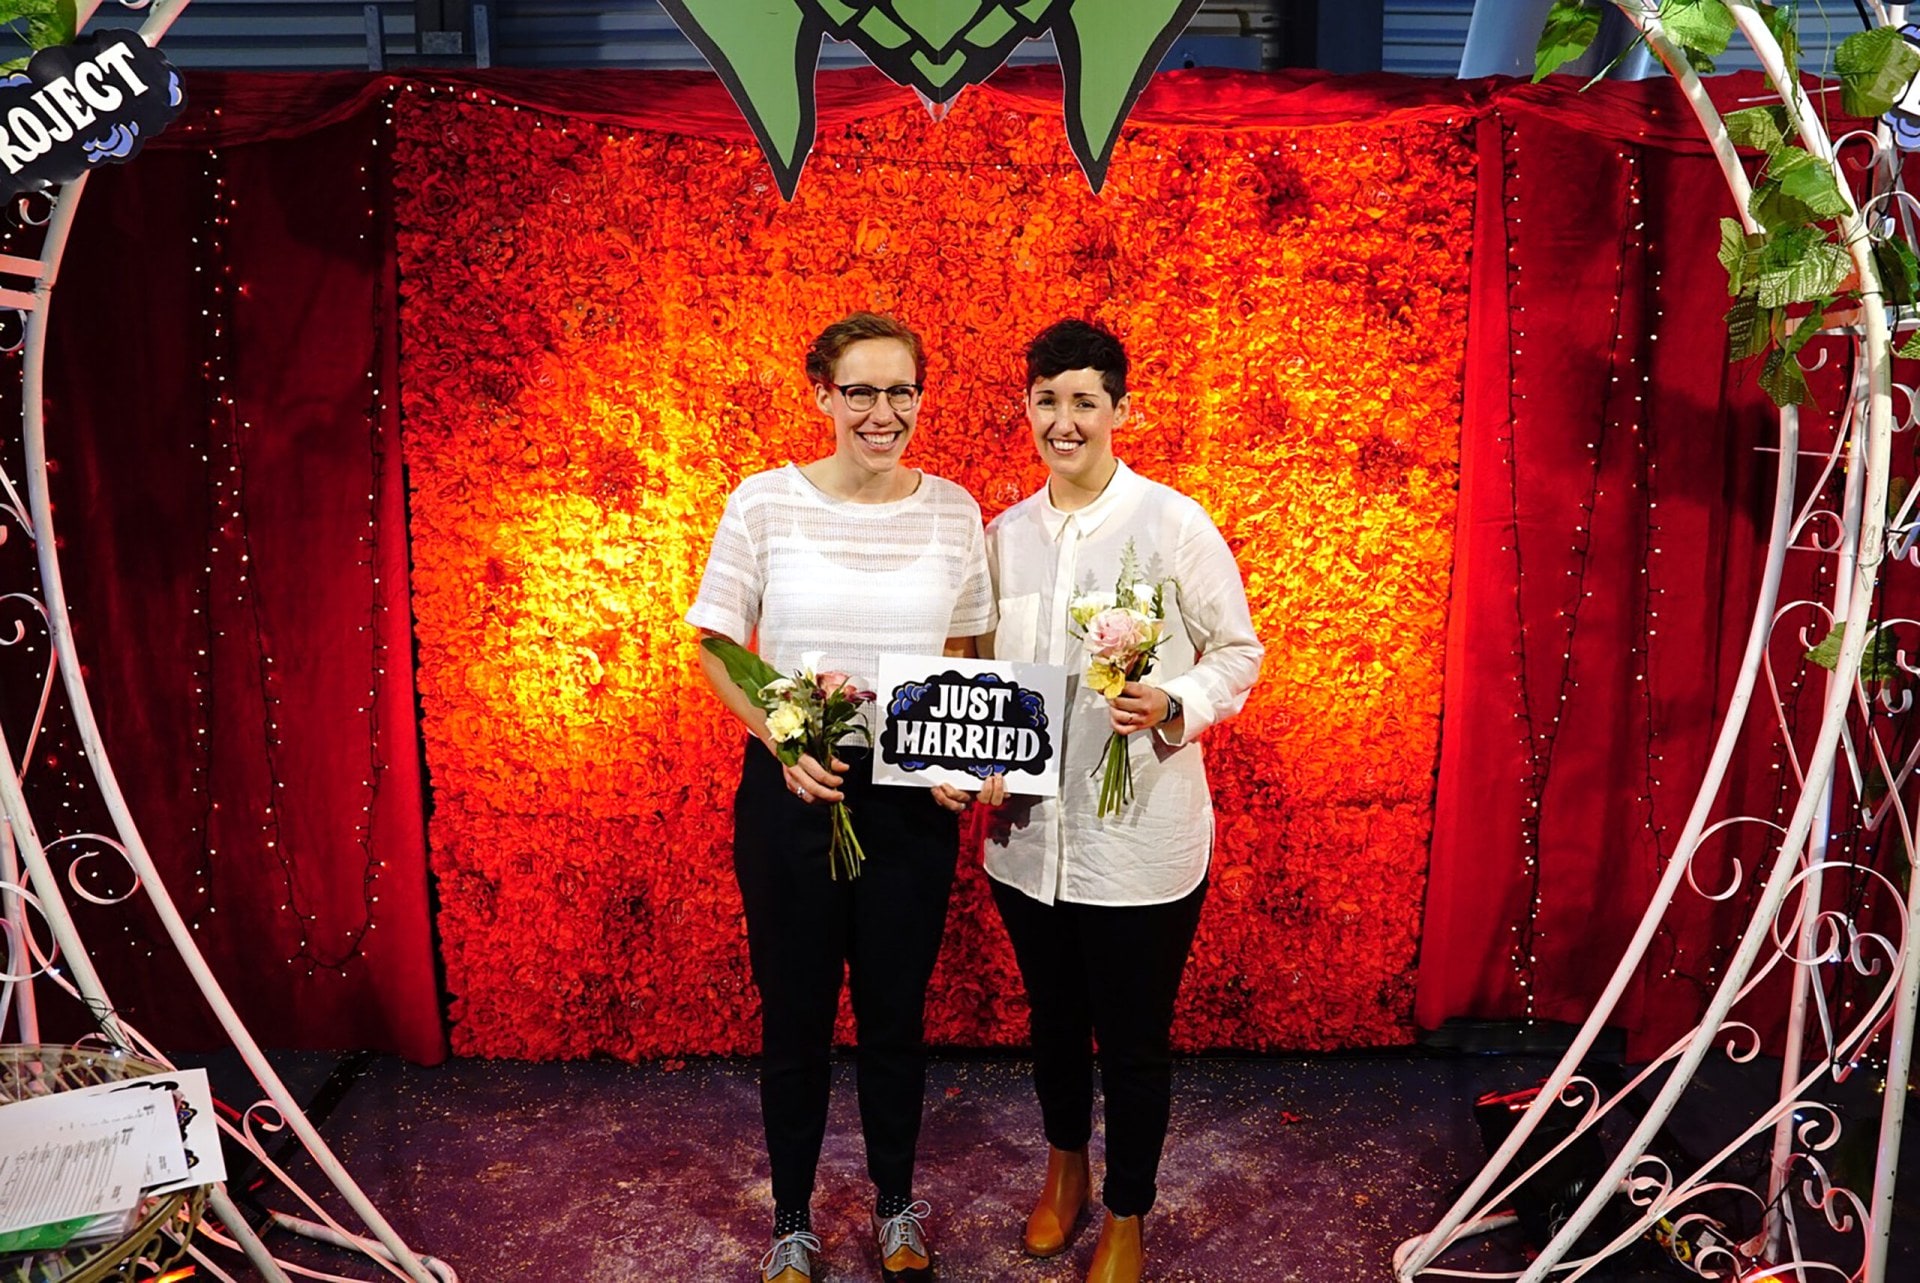 Callie Freegar and Sandi MacKechnie on their wedding at a beer festival 